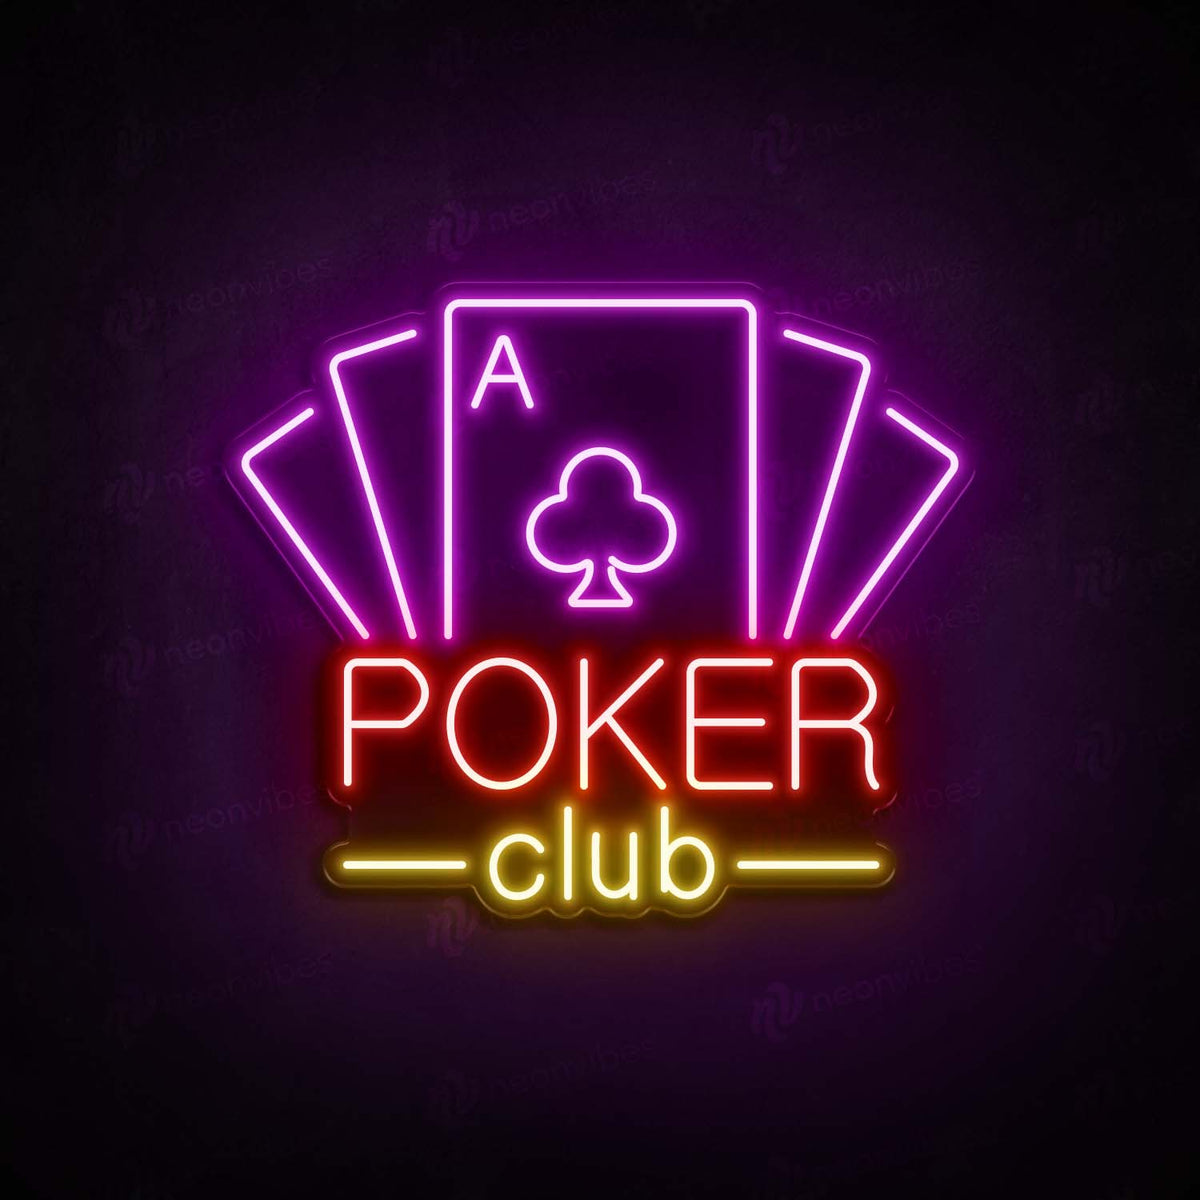 Poker Club neon sign